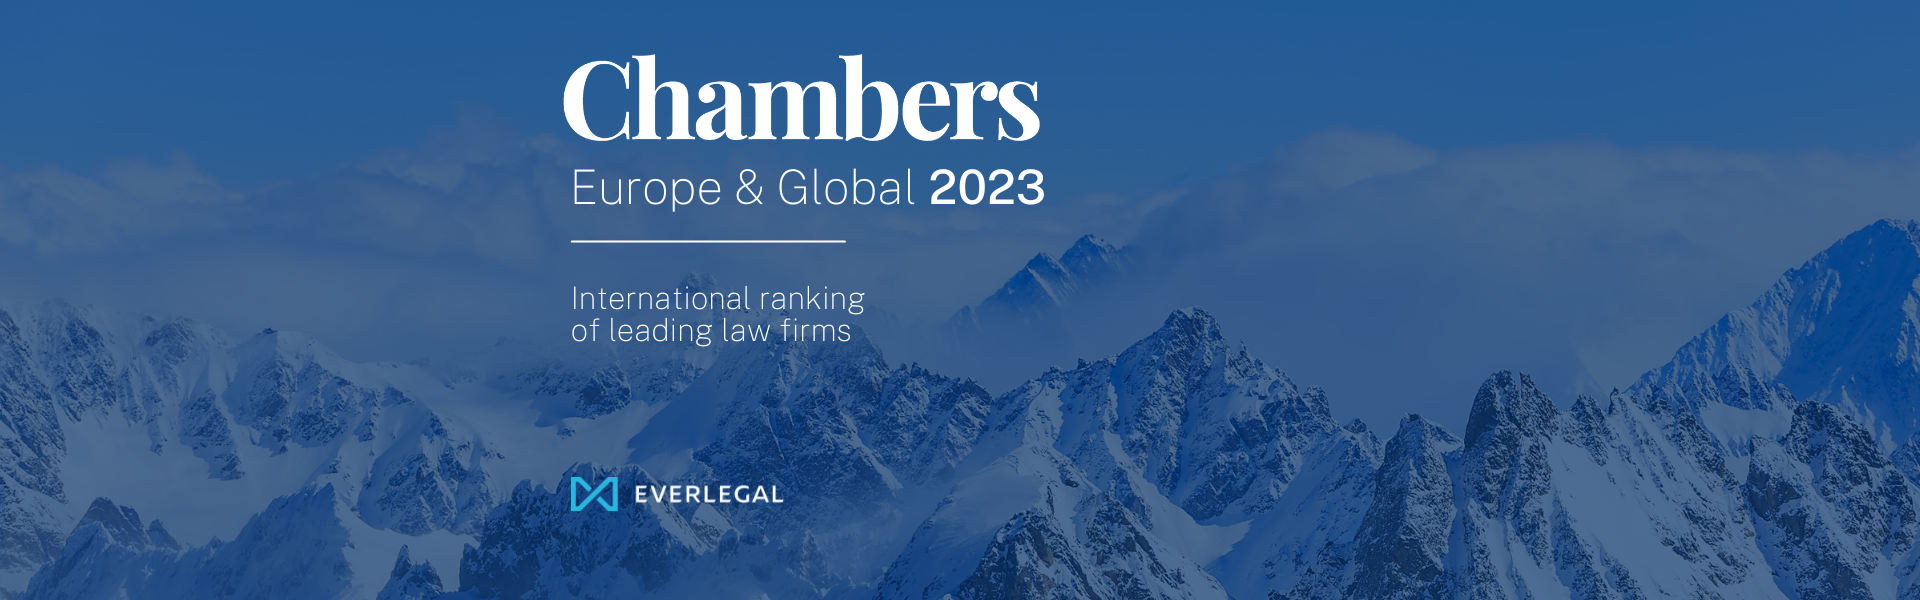 EVERLEGAL у рейтингах Chambers Europe & Global 2023